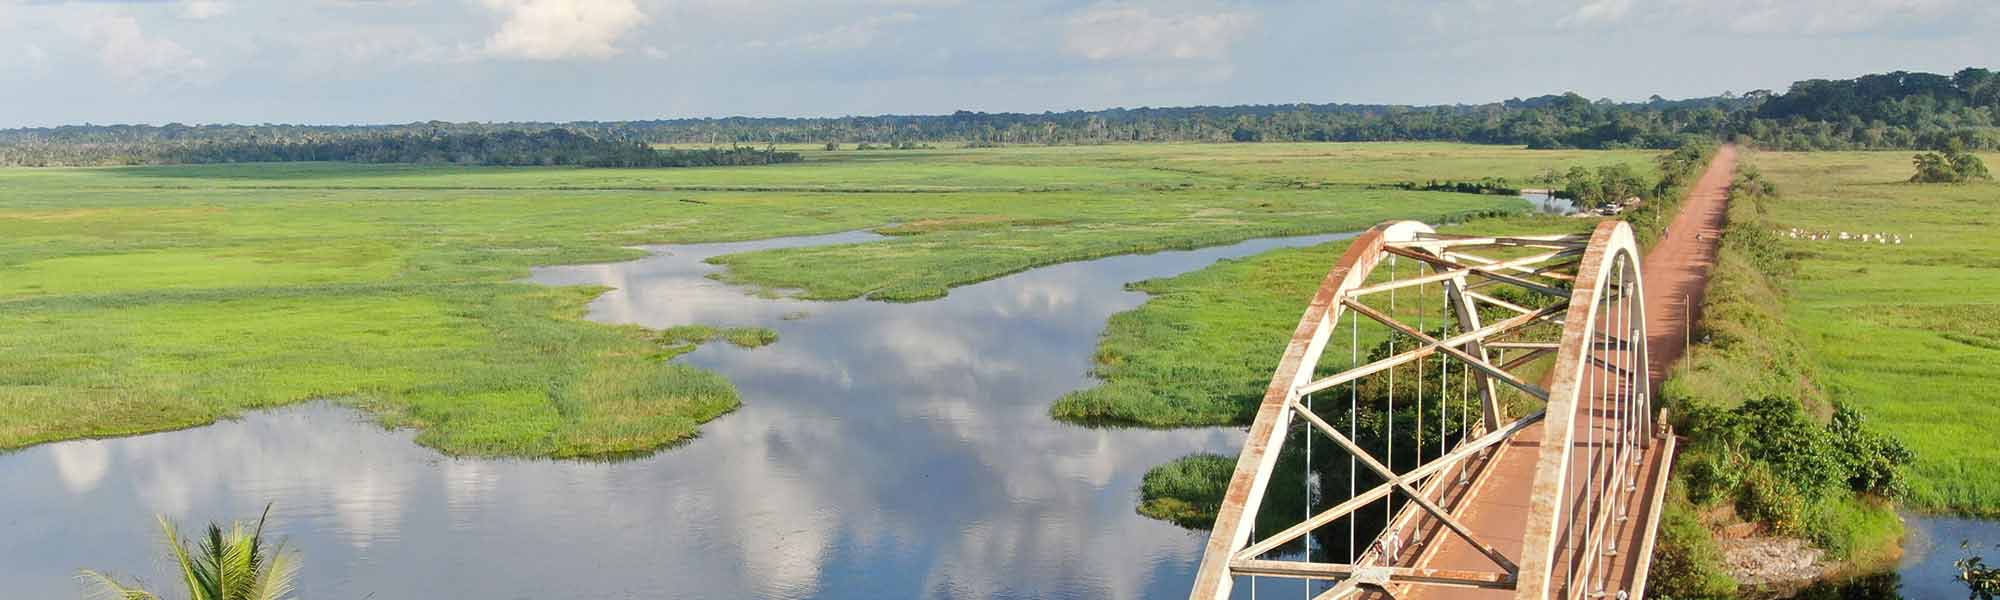 Landskap med bro over vann i Kamerun